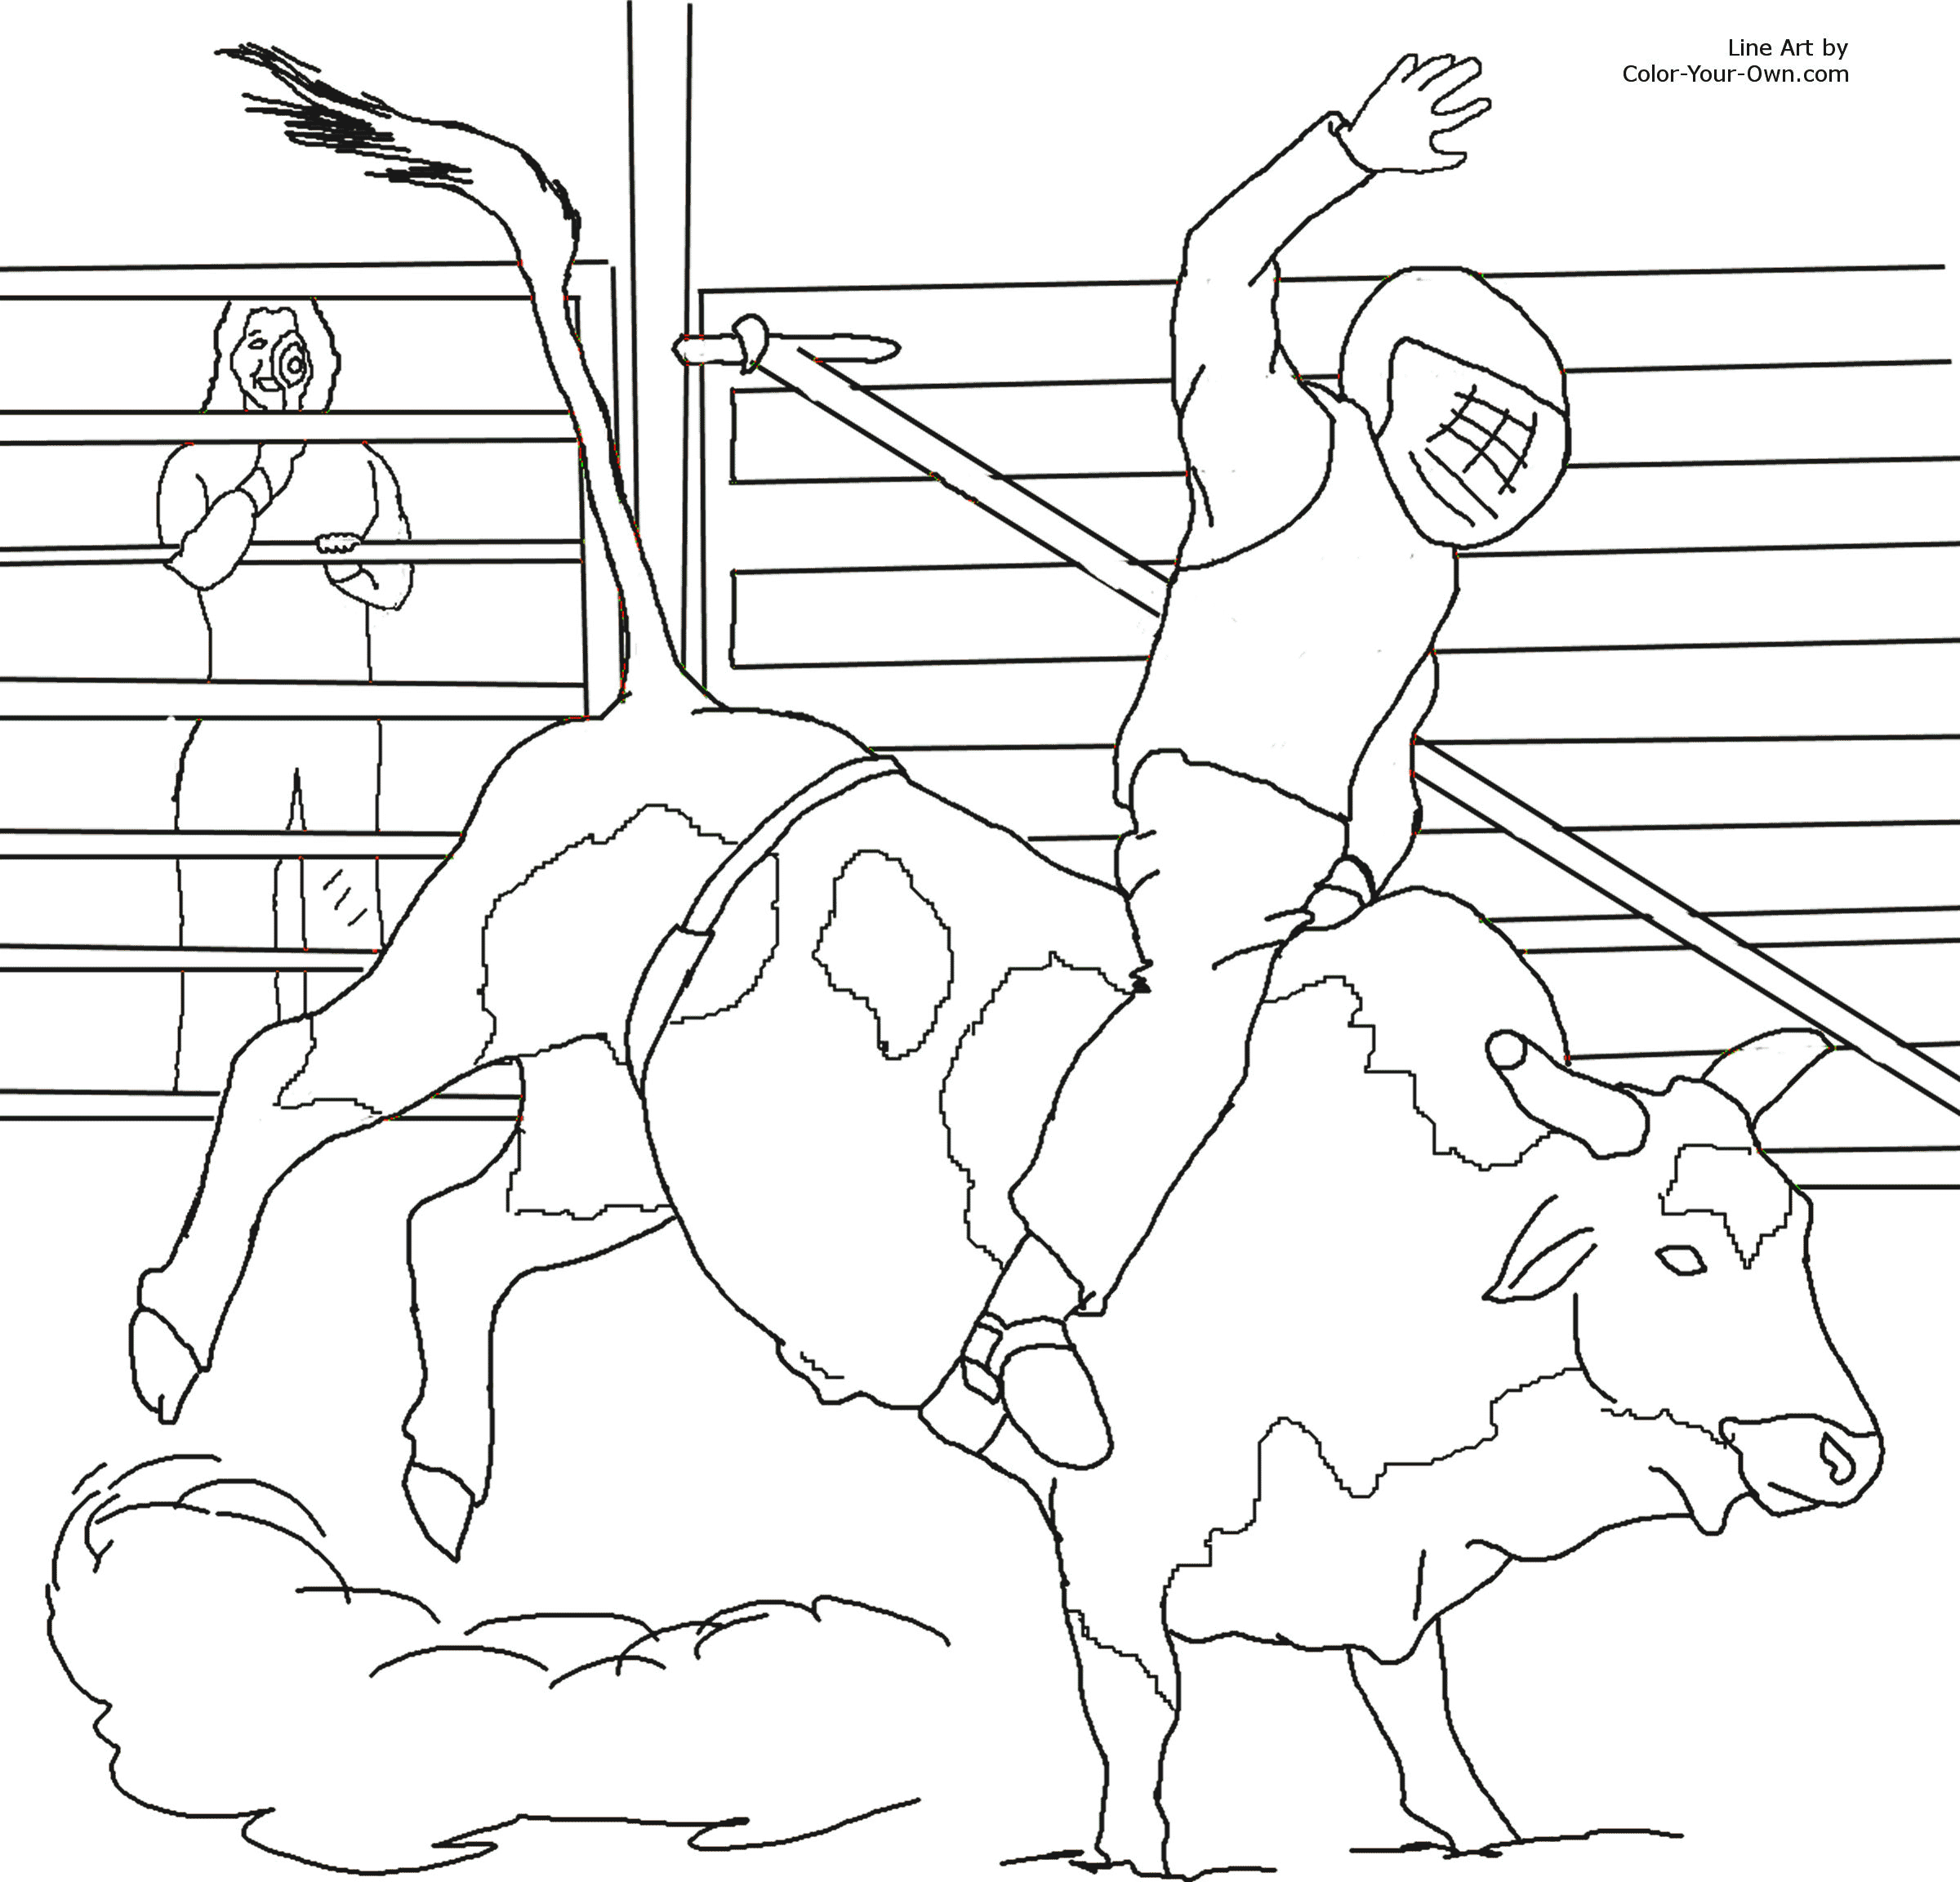 11 Pics Of Cowboy Bull Riding Coloring Page - Bull Riding Coloring